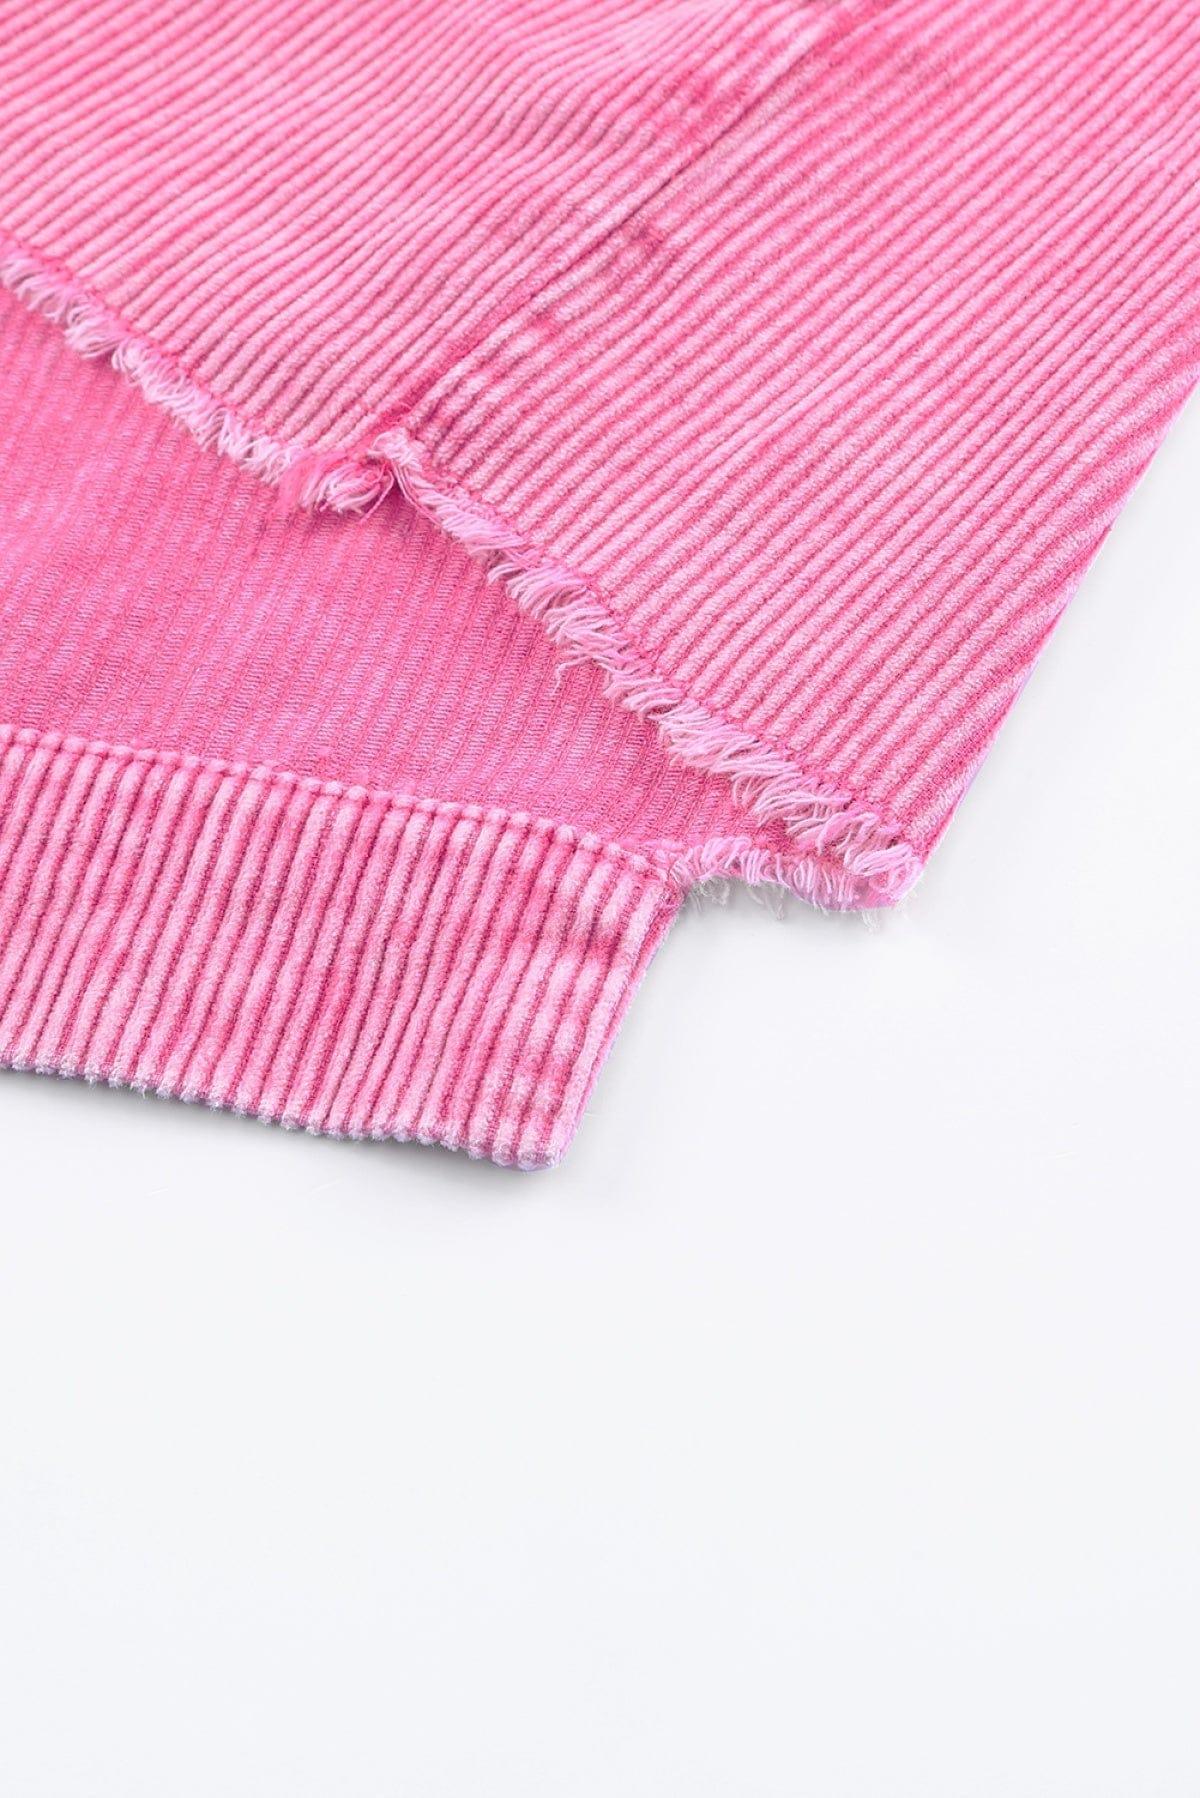 Bright Pink Vintage Style Raw Hem Corduroy Jacket